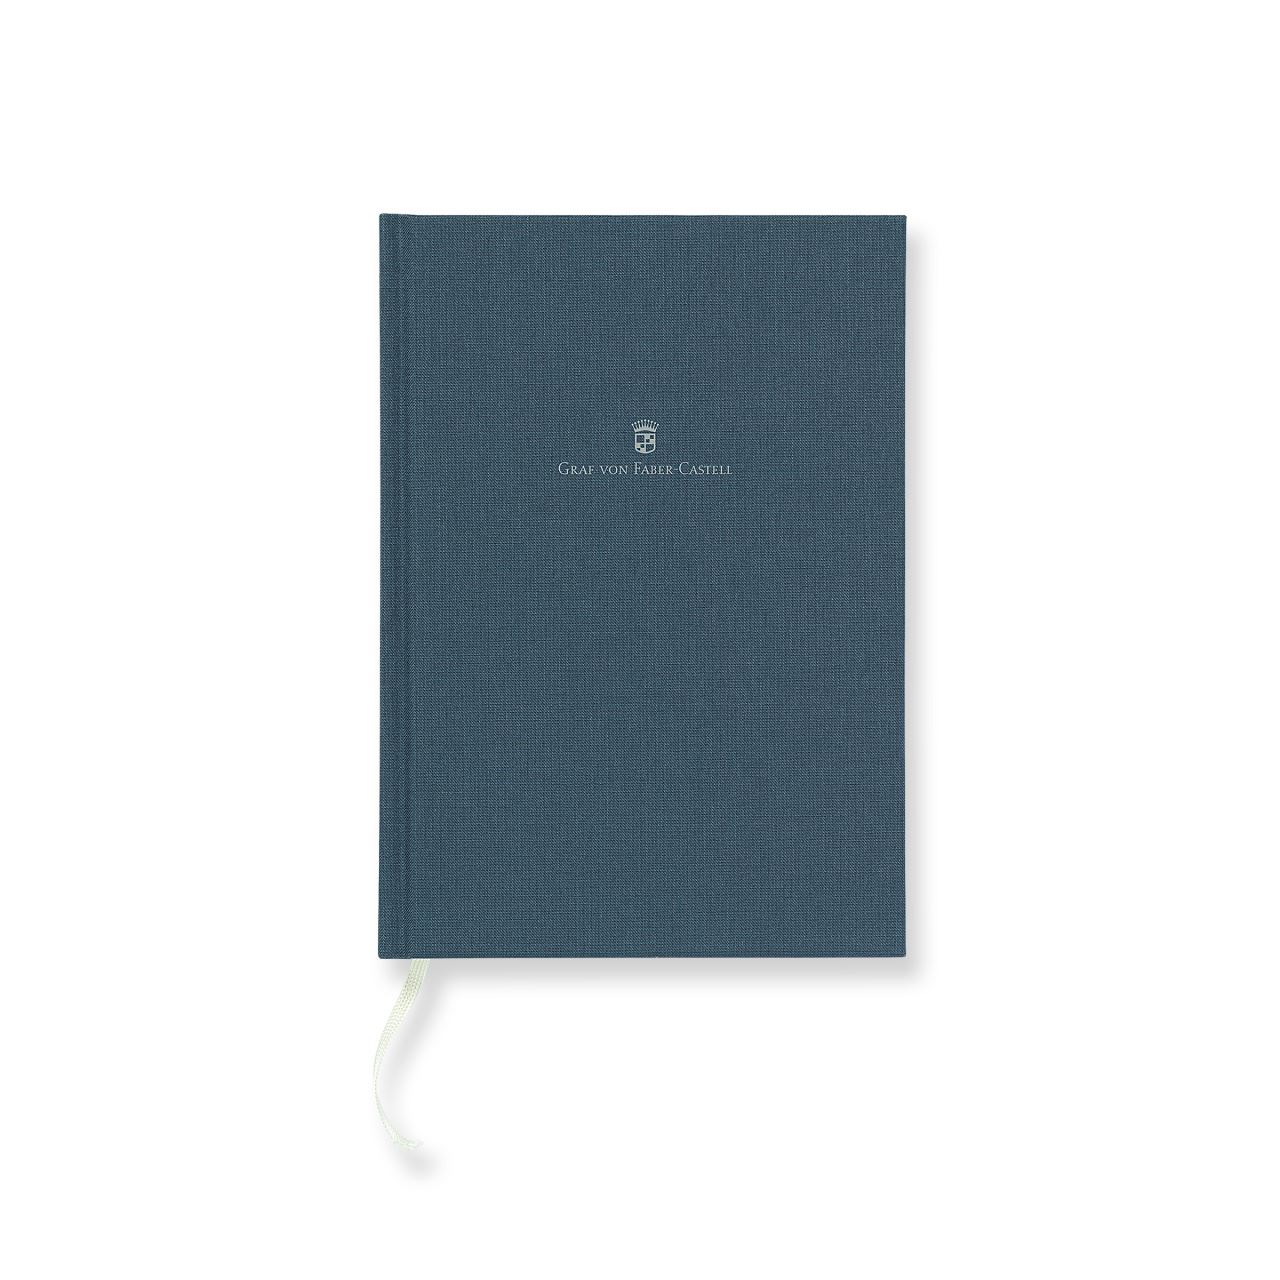 Graf-von-Faber-Castell - Recharge cahier relie lin A5, Bleu